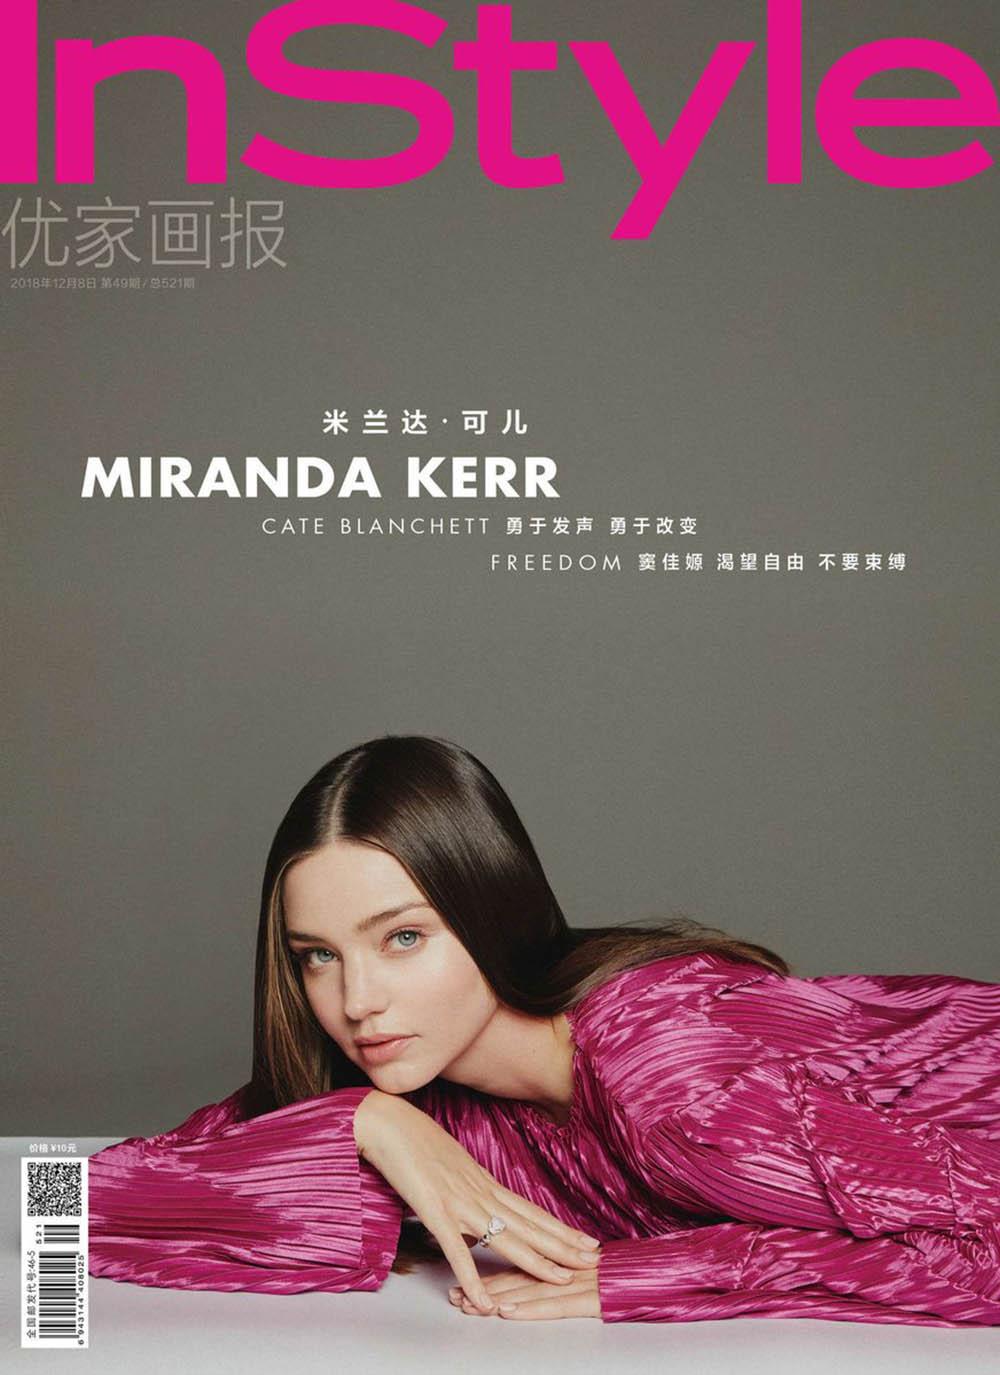 Miranda Kerr covers InStyle China December 8th, 2018 by Jumbo Tsui